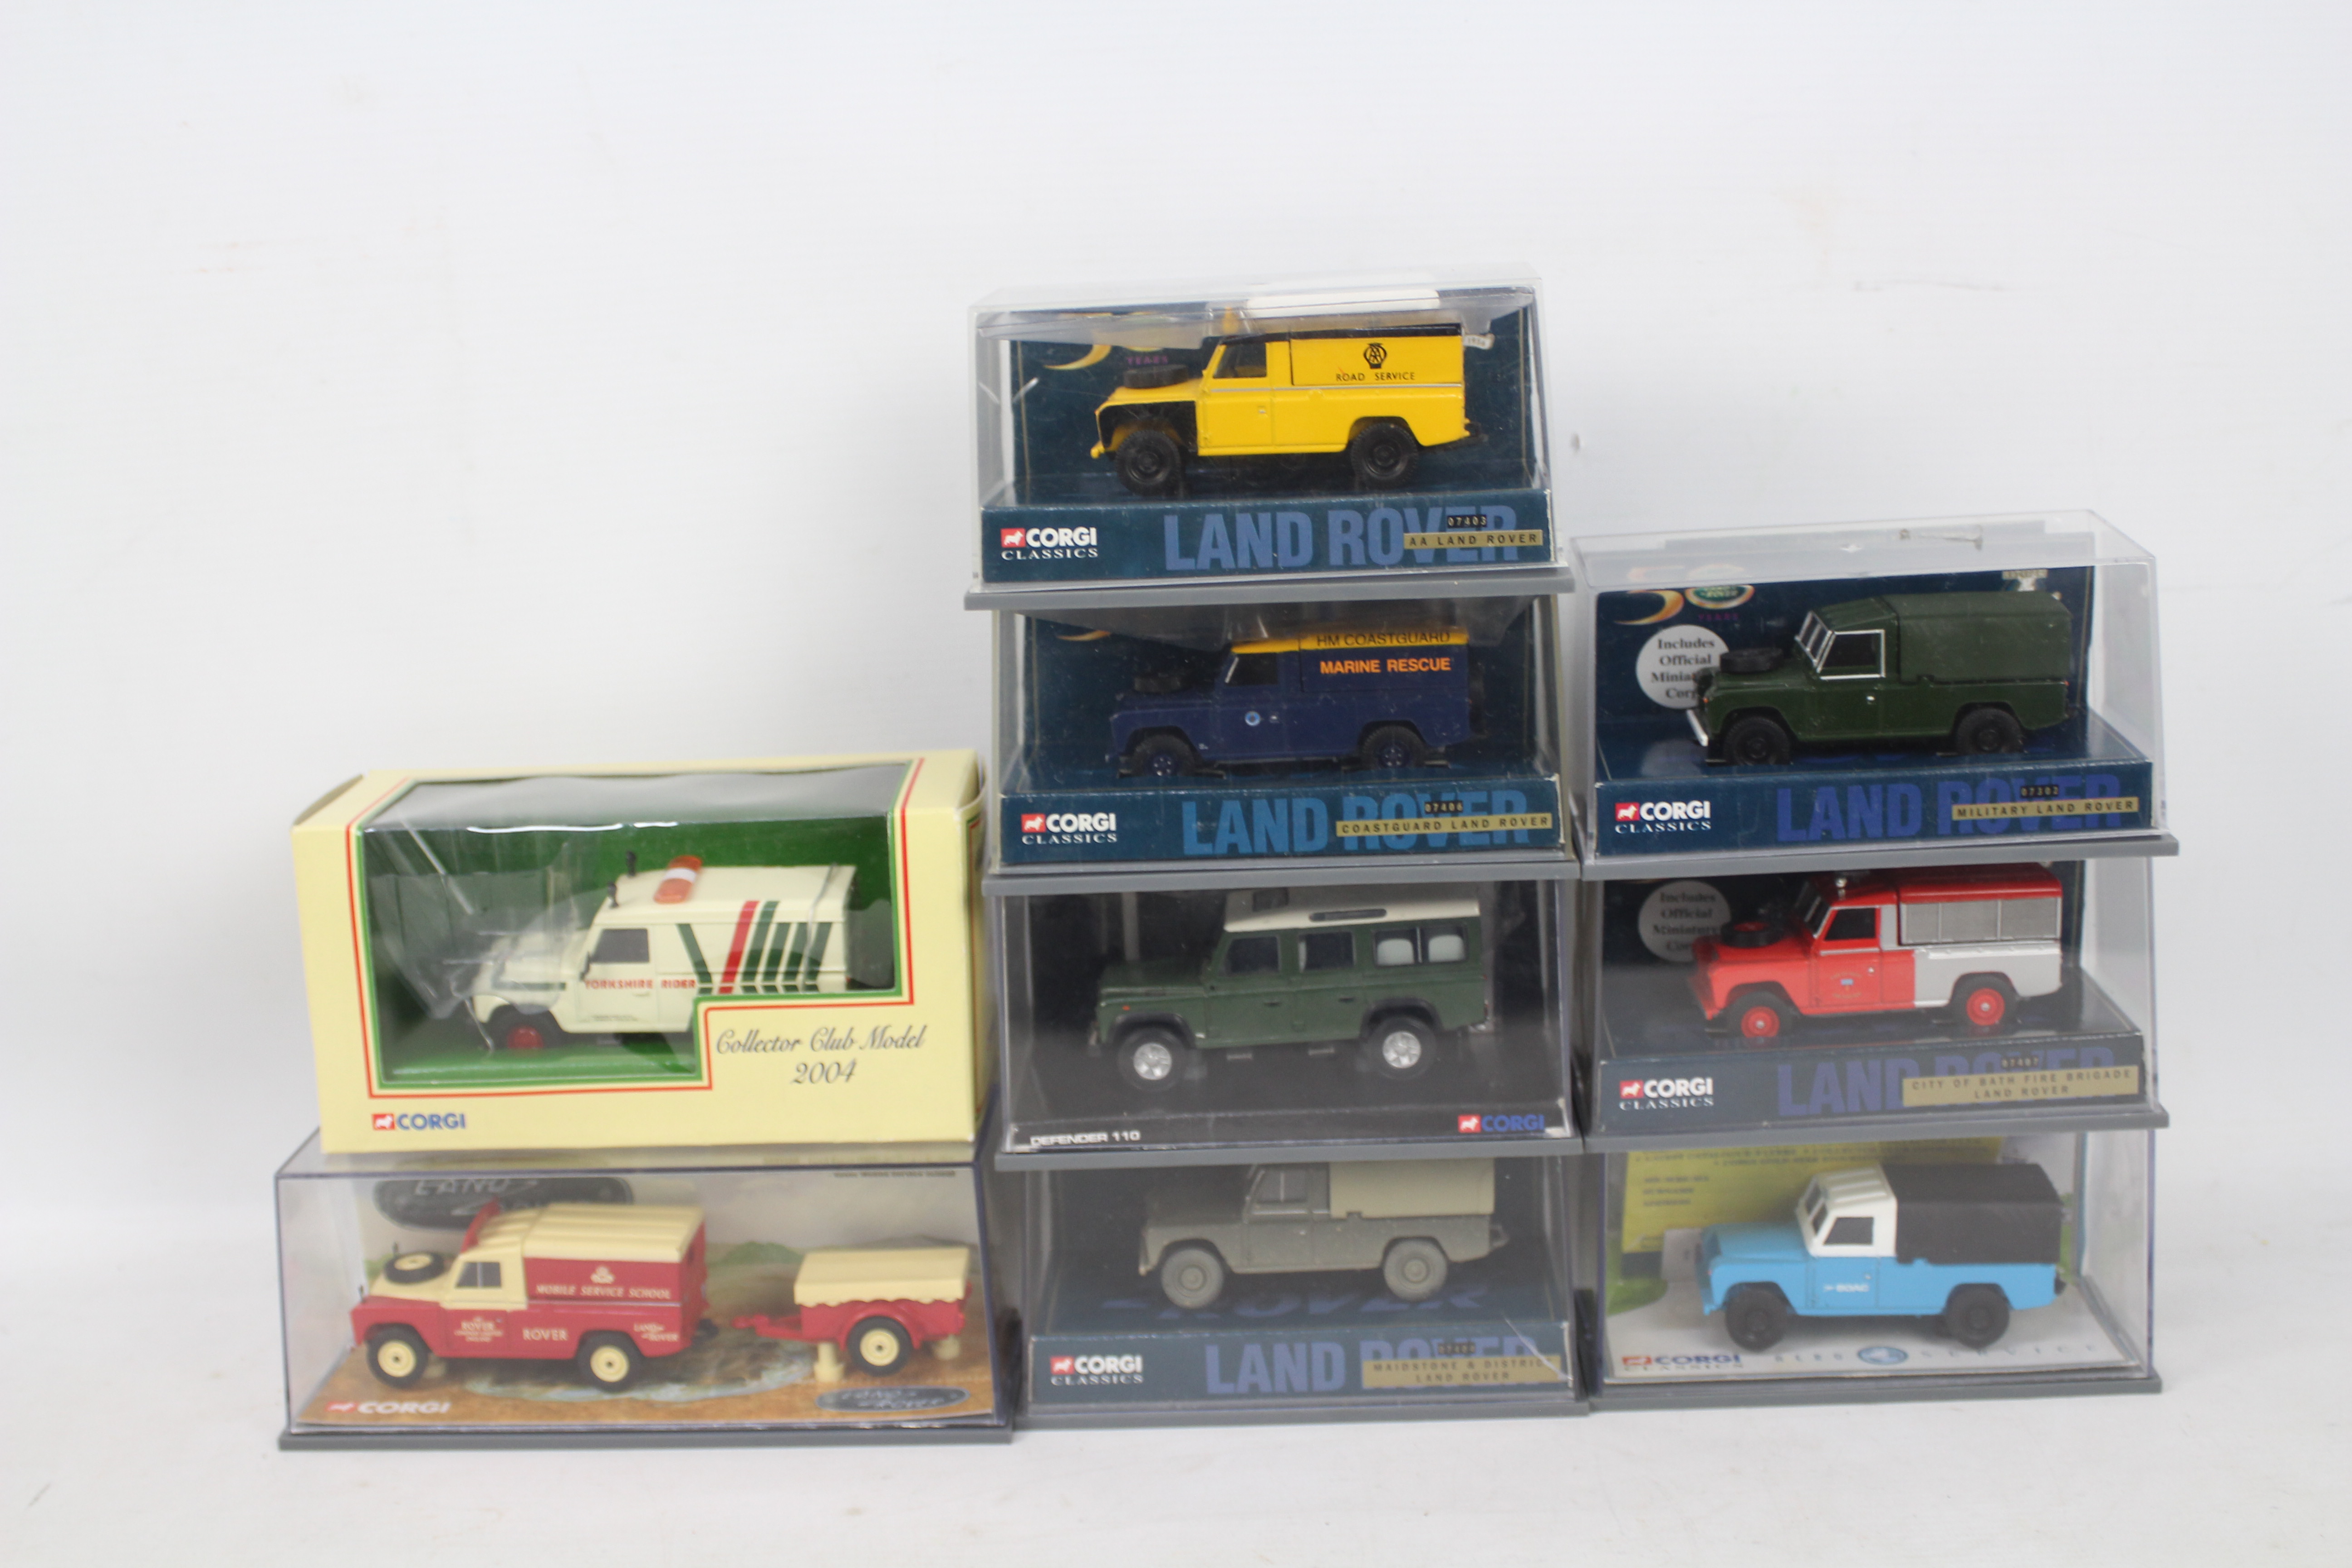 Corgi Classics - A troop of nine boxed diecast model Land Rovers from various Corgi ranges.